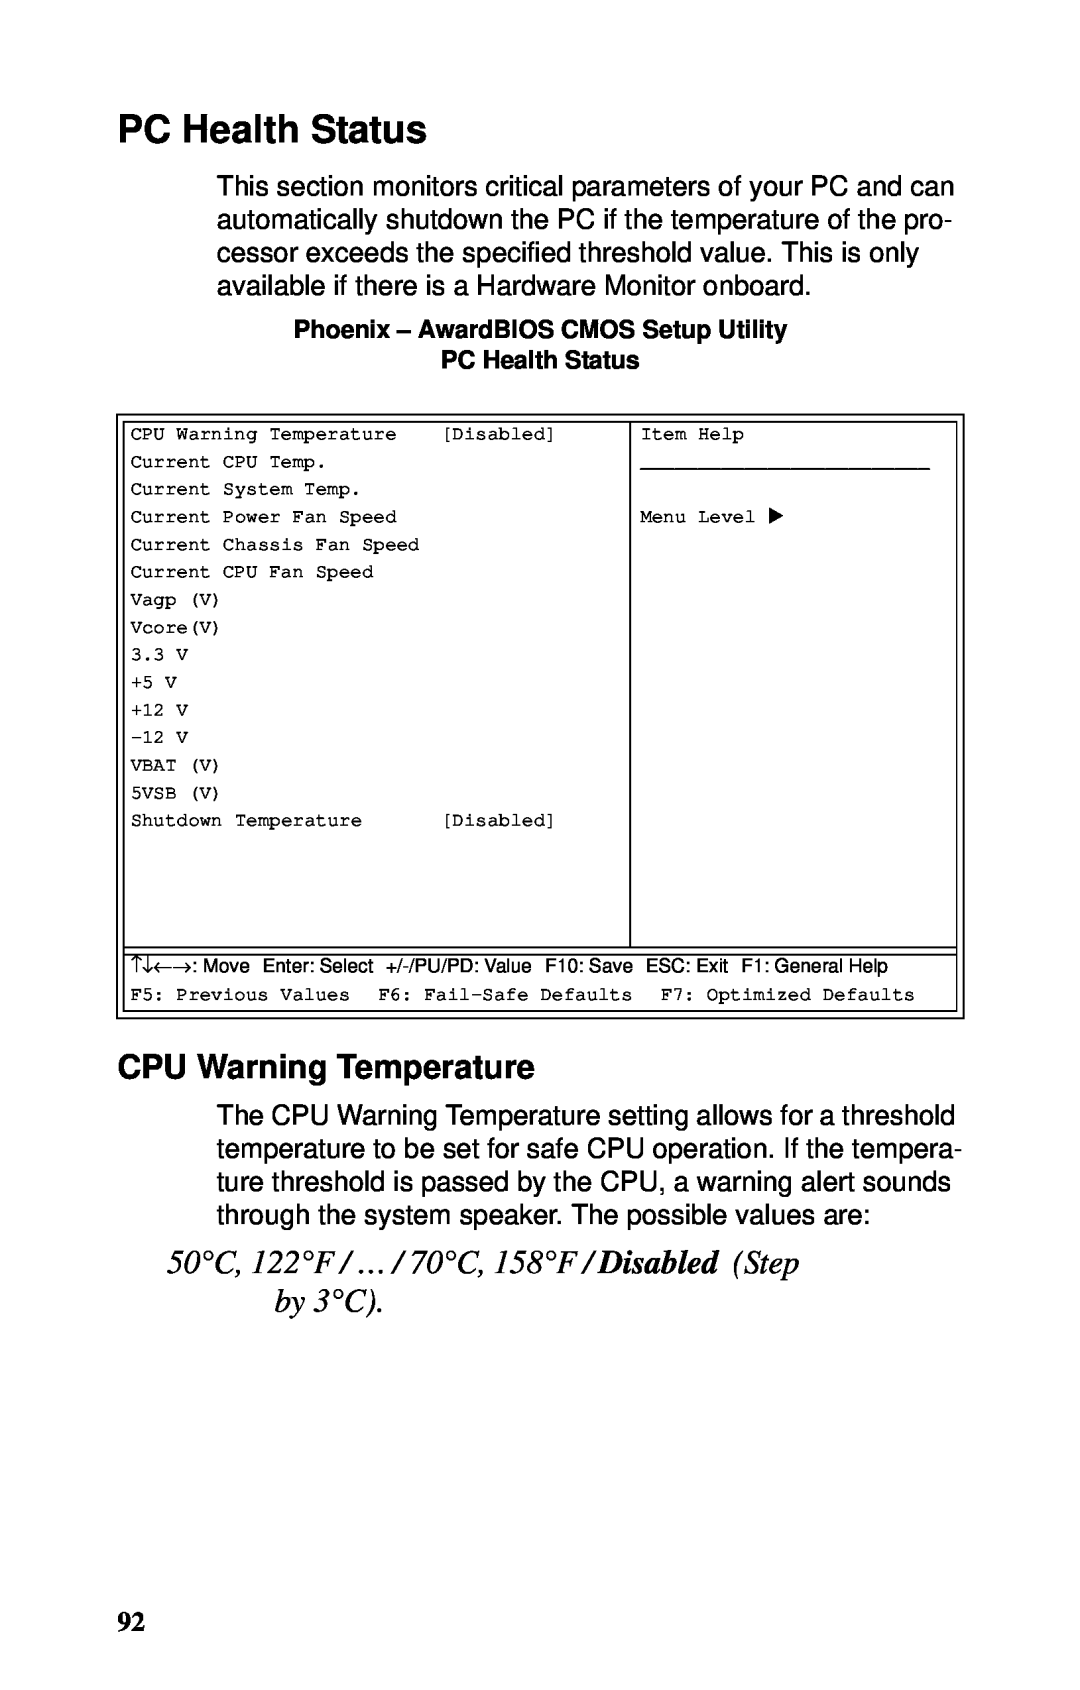 Tyan Computer B5102, GX21 manual PC Health Status, CPU Warning Temperature, 50C, 122F / … / 70C, 158F / Disabled Step by 3C 